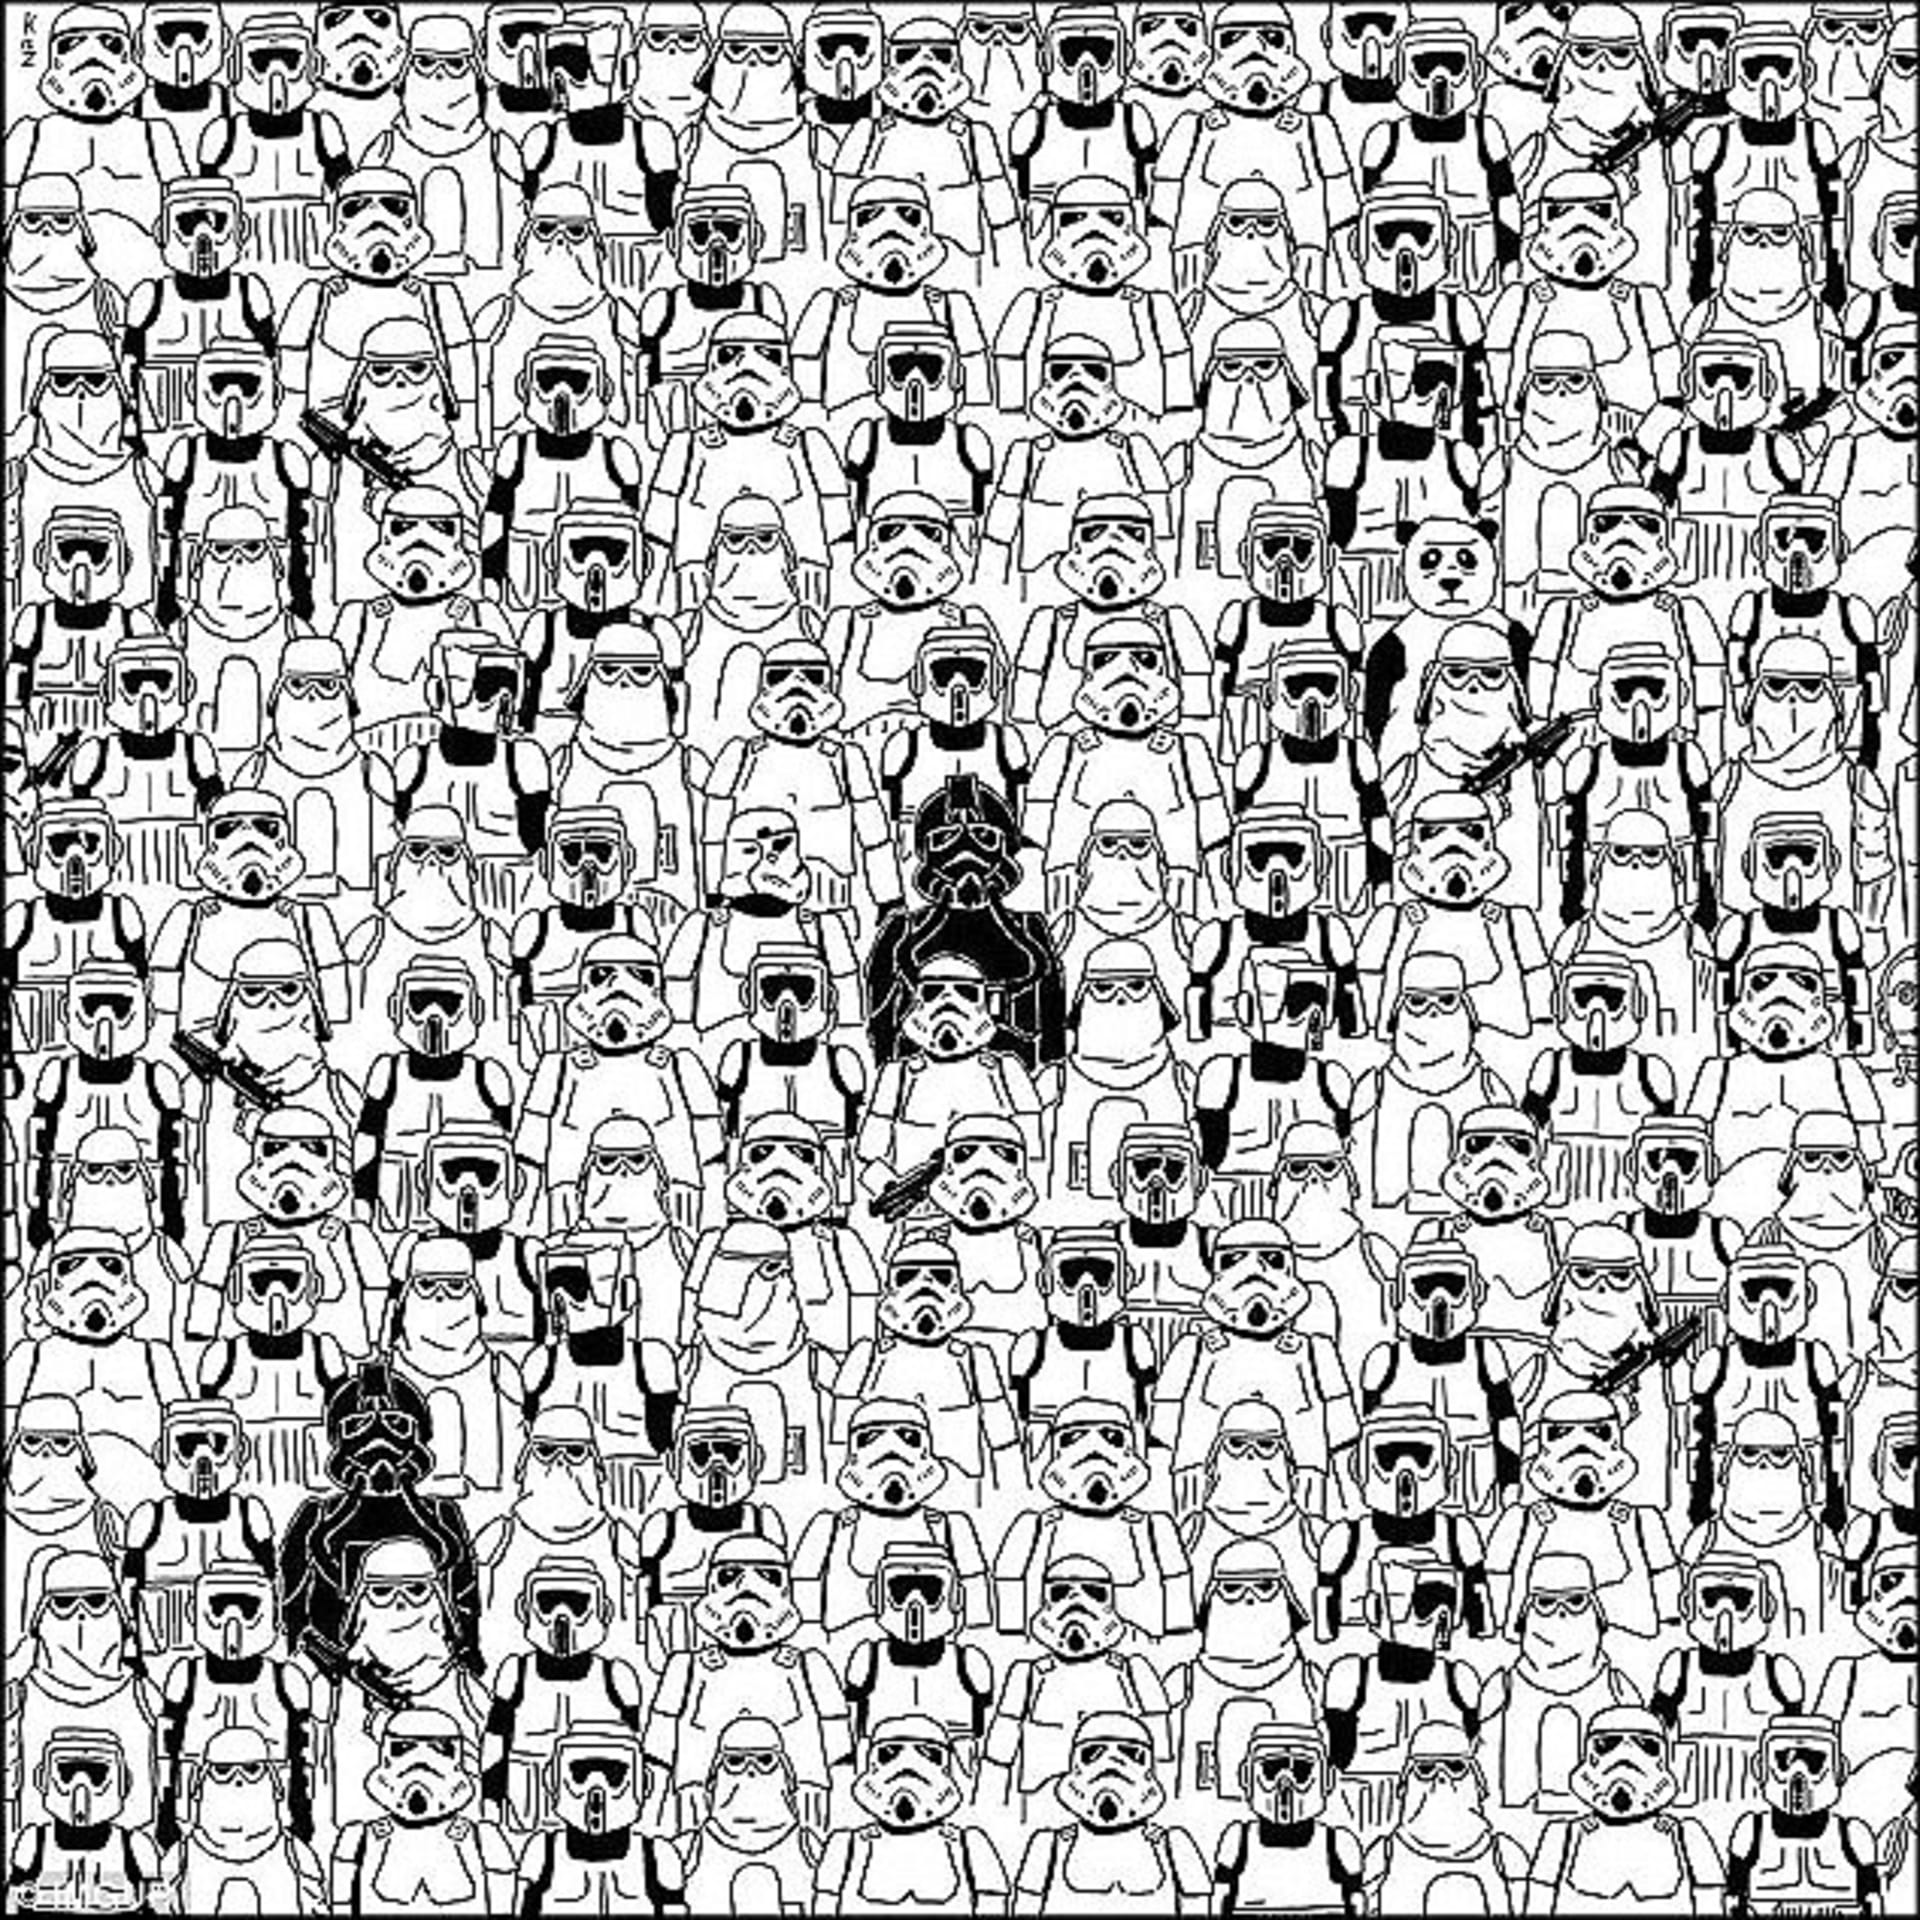 Najdete mezi stormtroopery pandu?